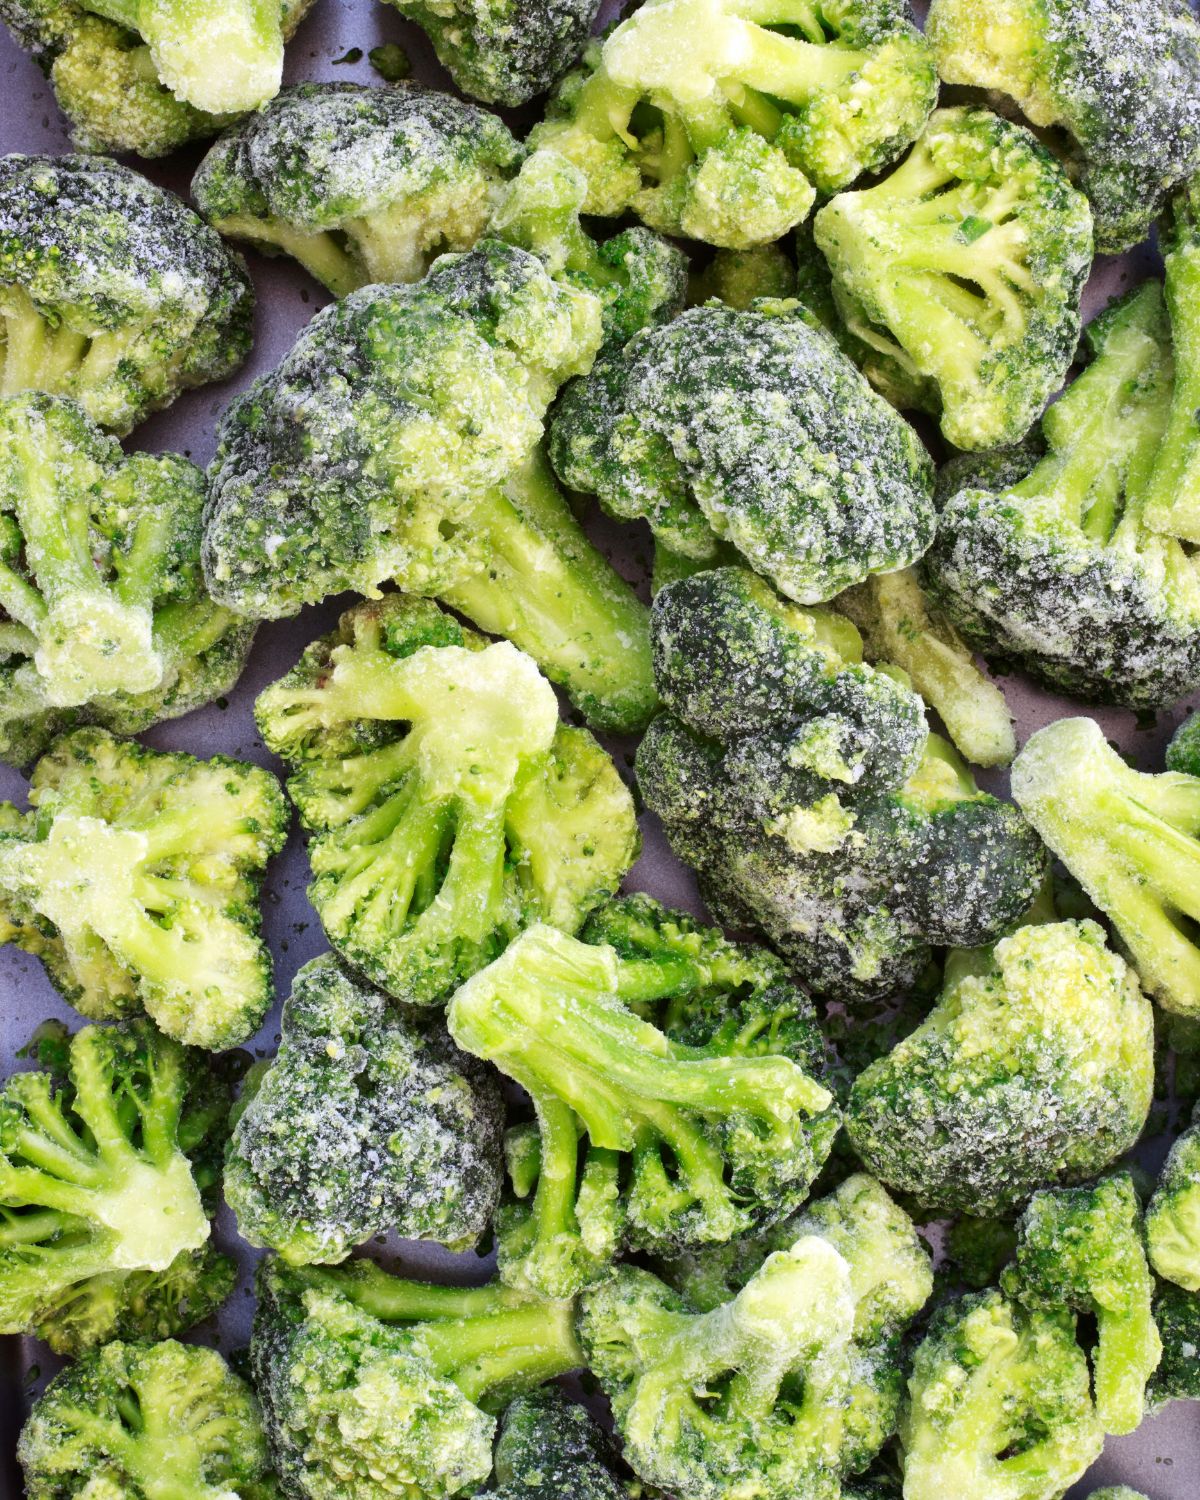 A tray of frozen broccoli.